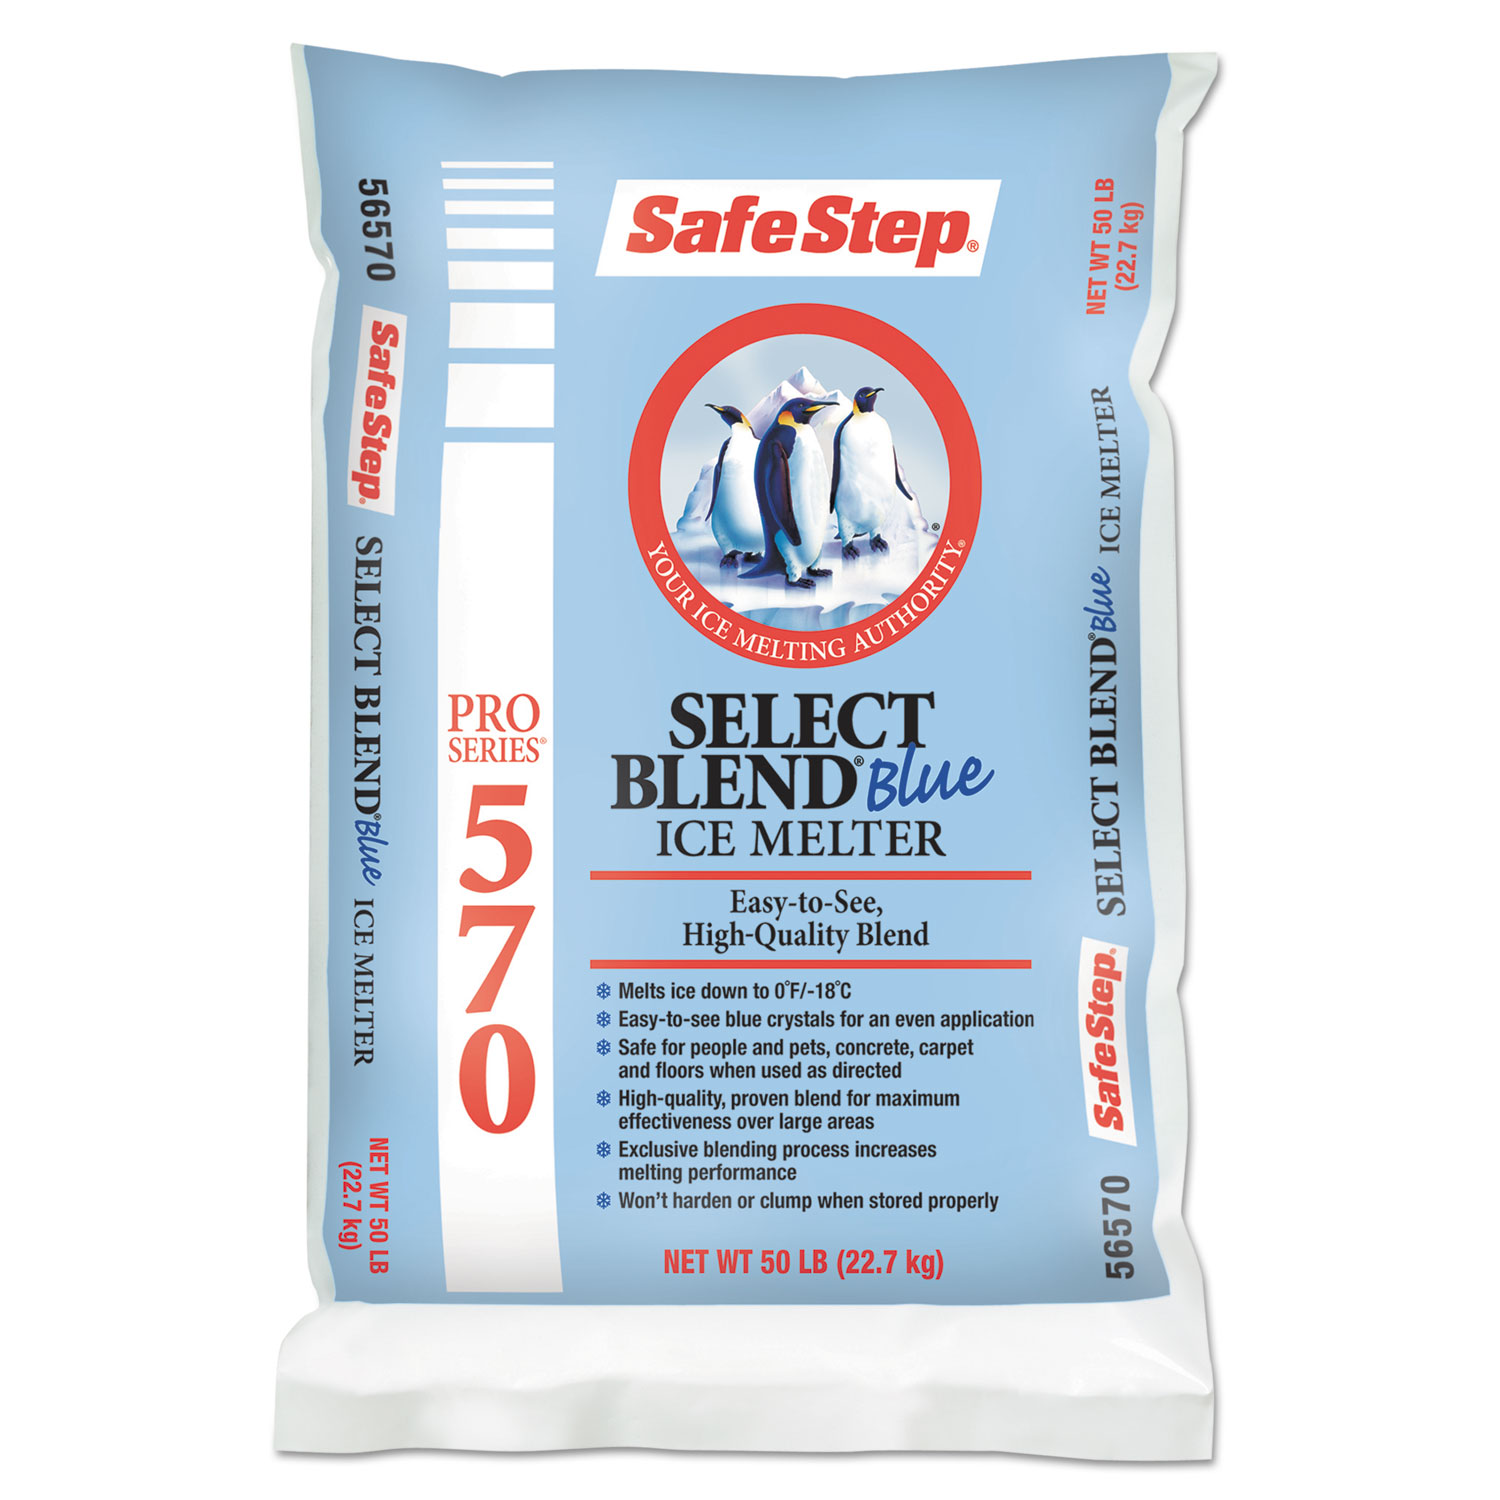 Pro Series 570 Select Blend Blue Ice Melt, 50lb Bag, 49/Carton